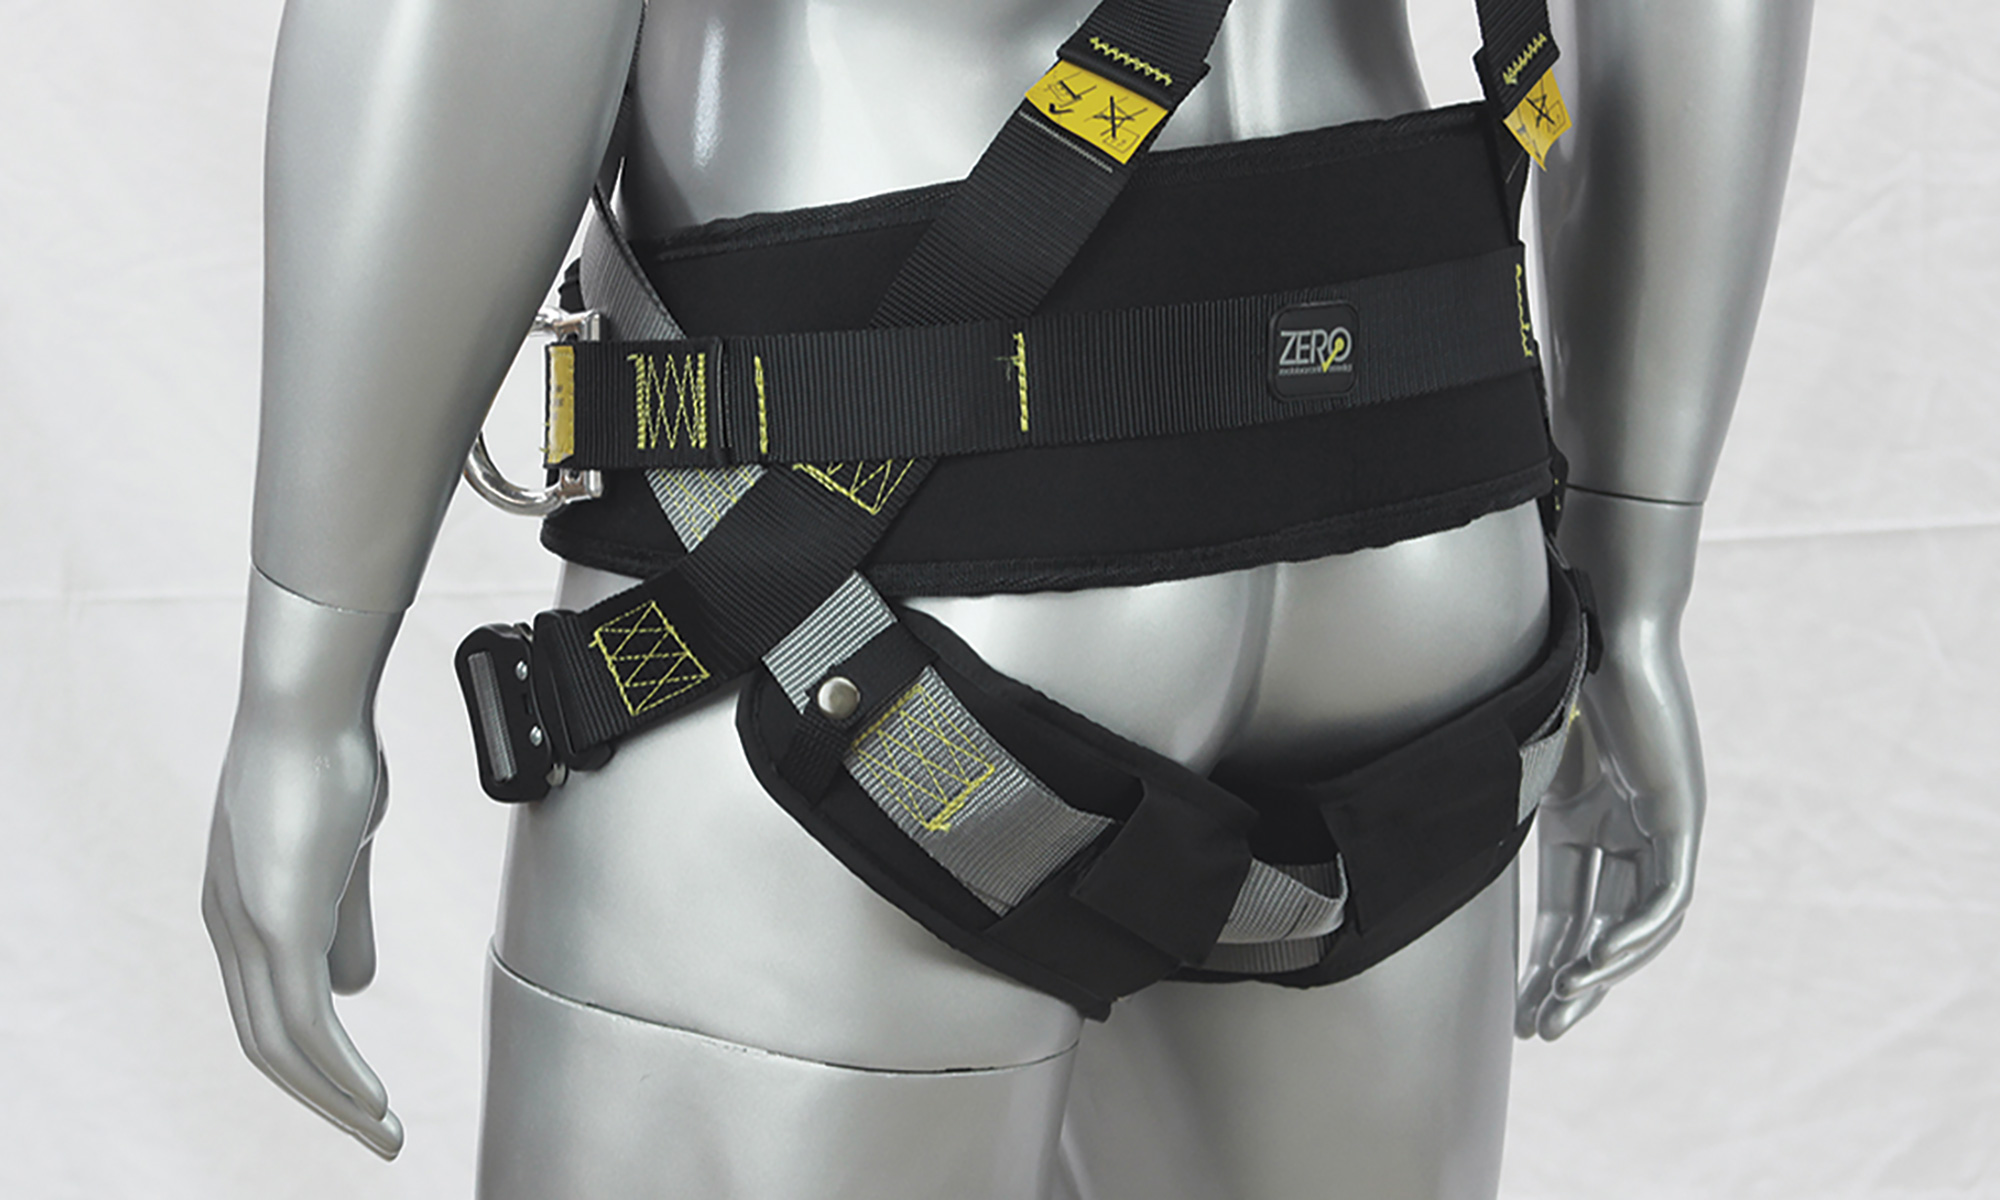 ZERO Z+52 Tradesman Harness with Positioning belt